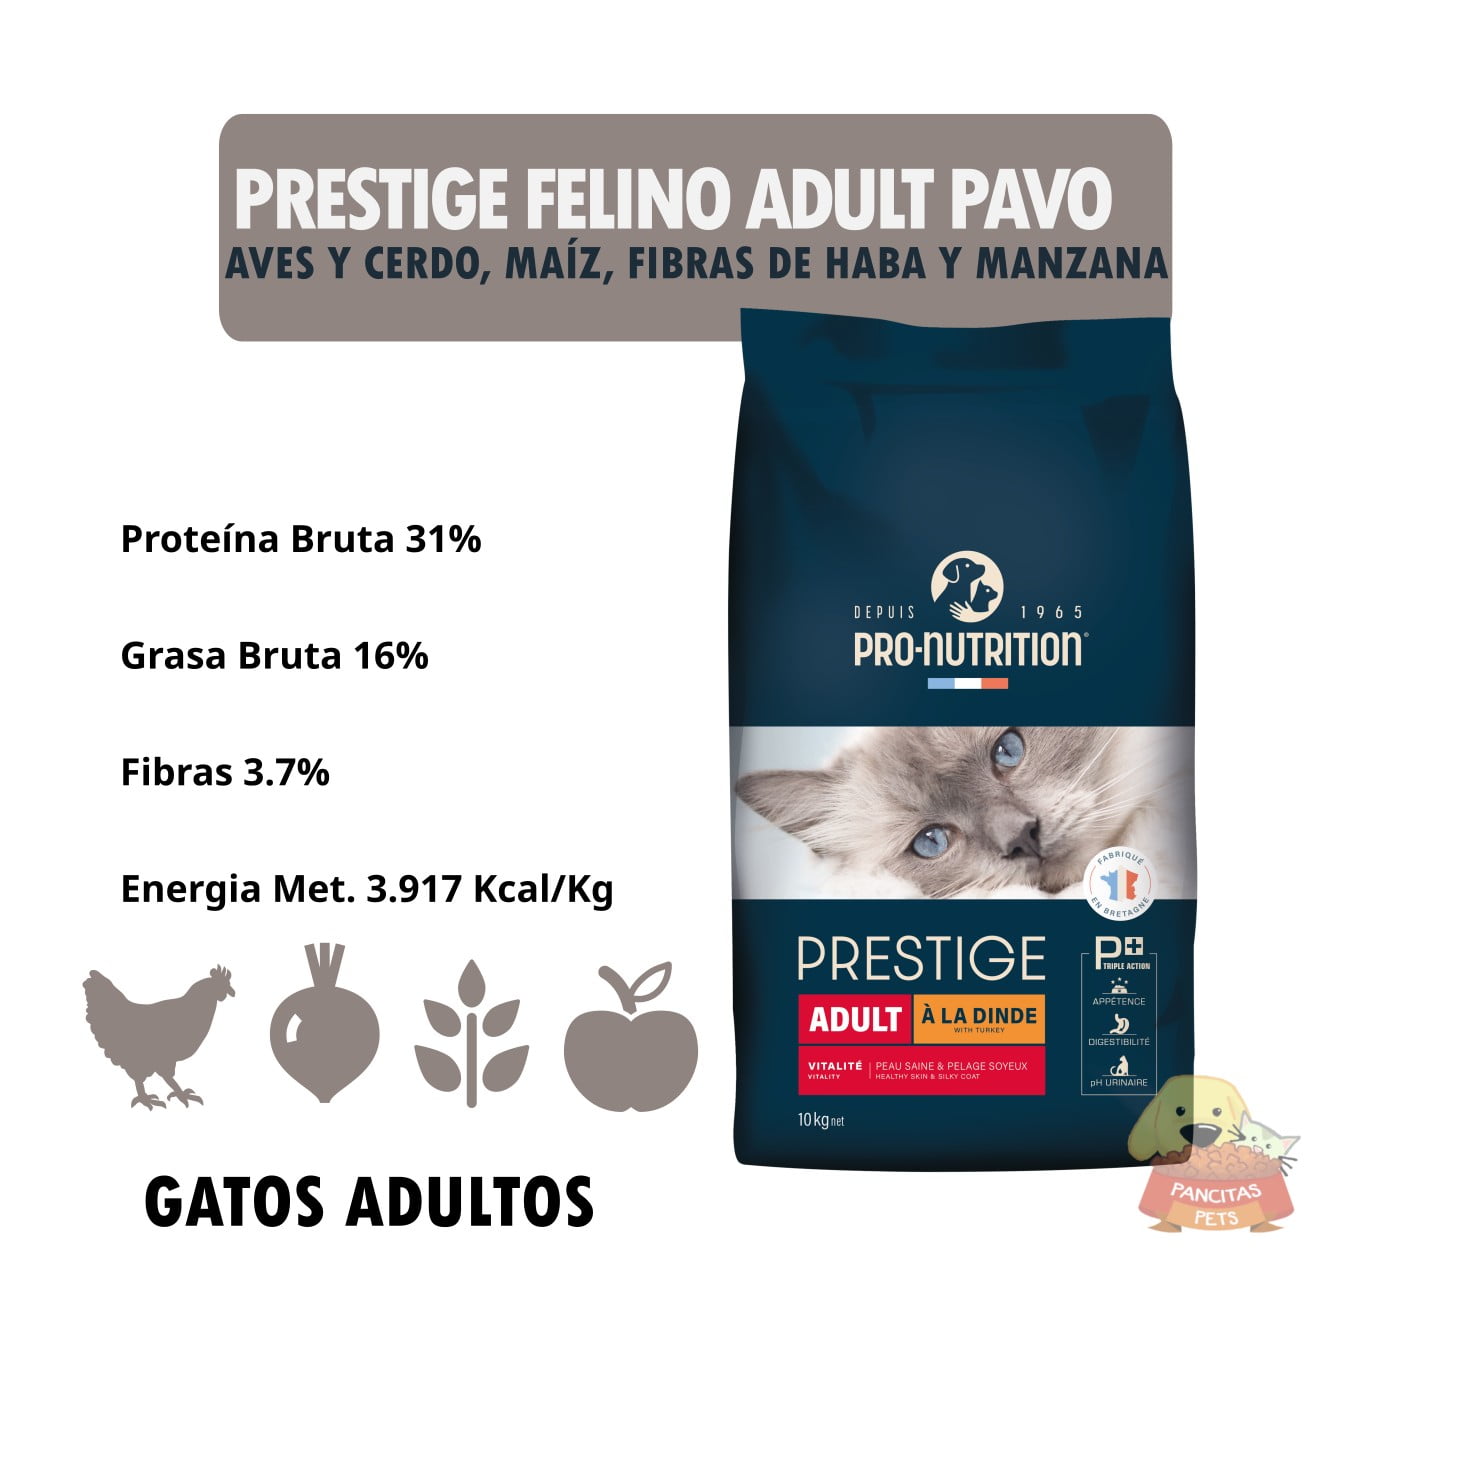 Prestige Felino Adult Pavo Detalle